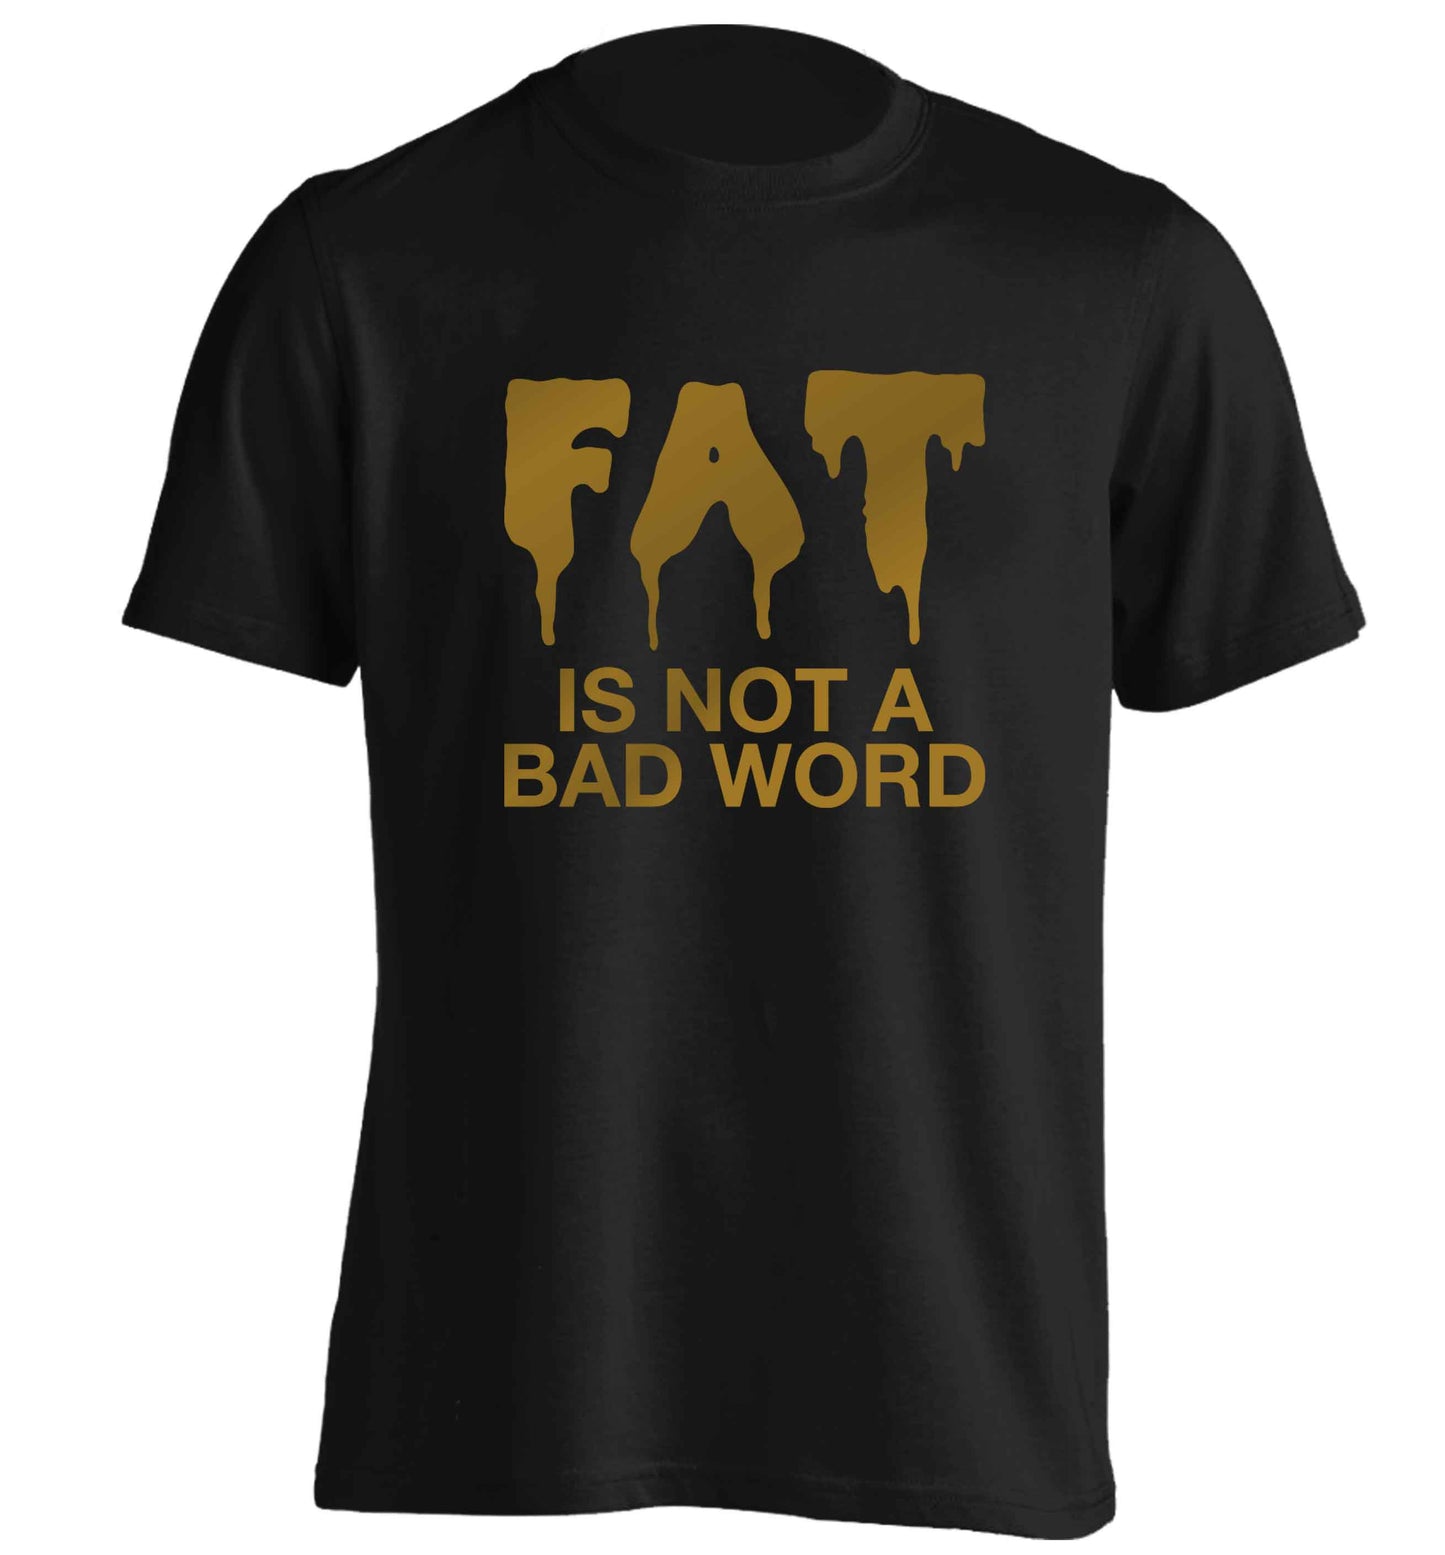 Fat is not a bad word adults unisex black Tshirt 2XL